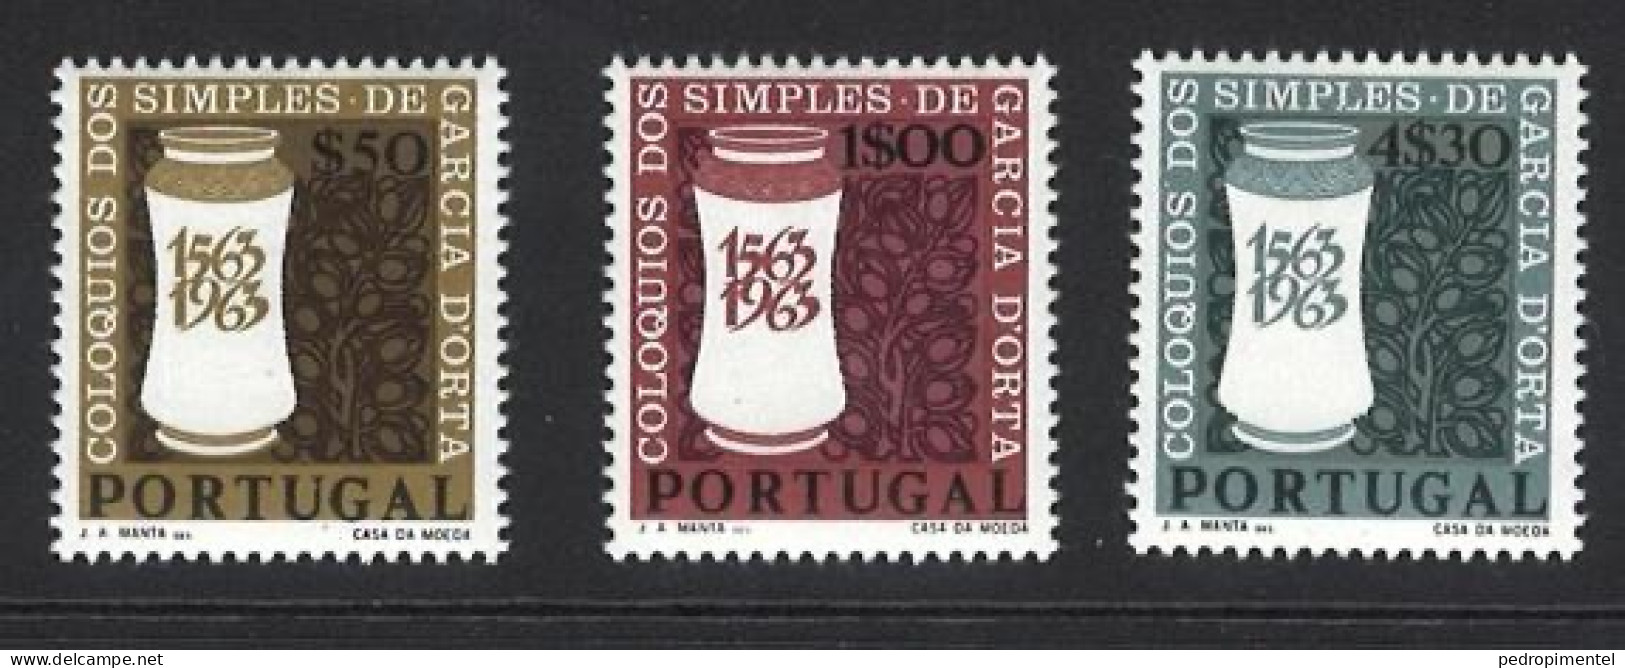 Portugal Stamps 1964 "Garcia Da Horta" Condition MNH OG #925-927 - Nuovi